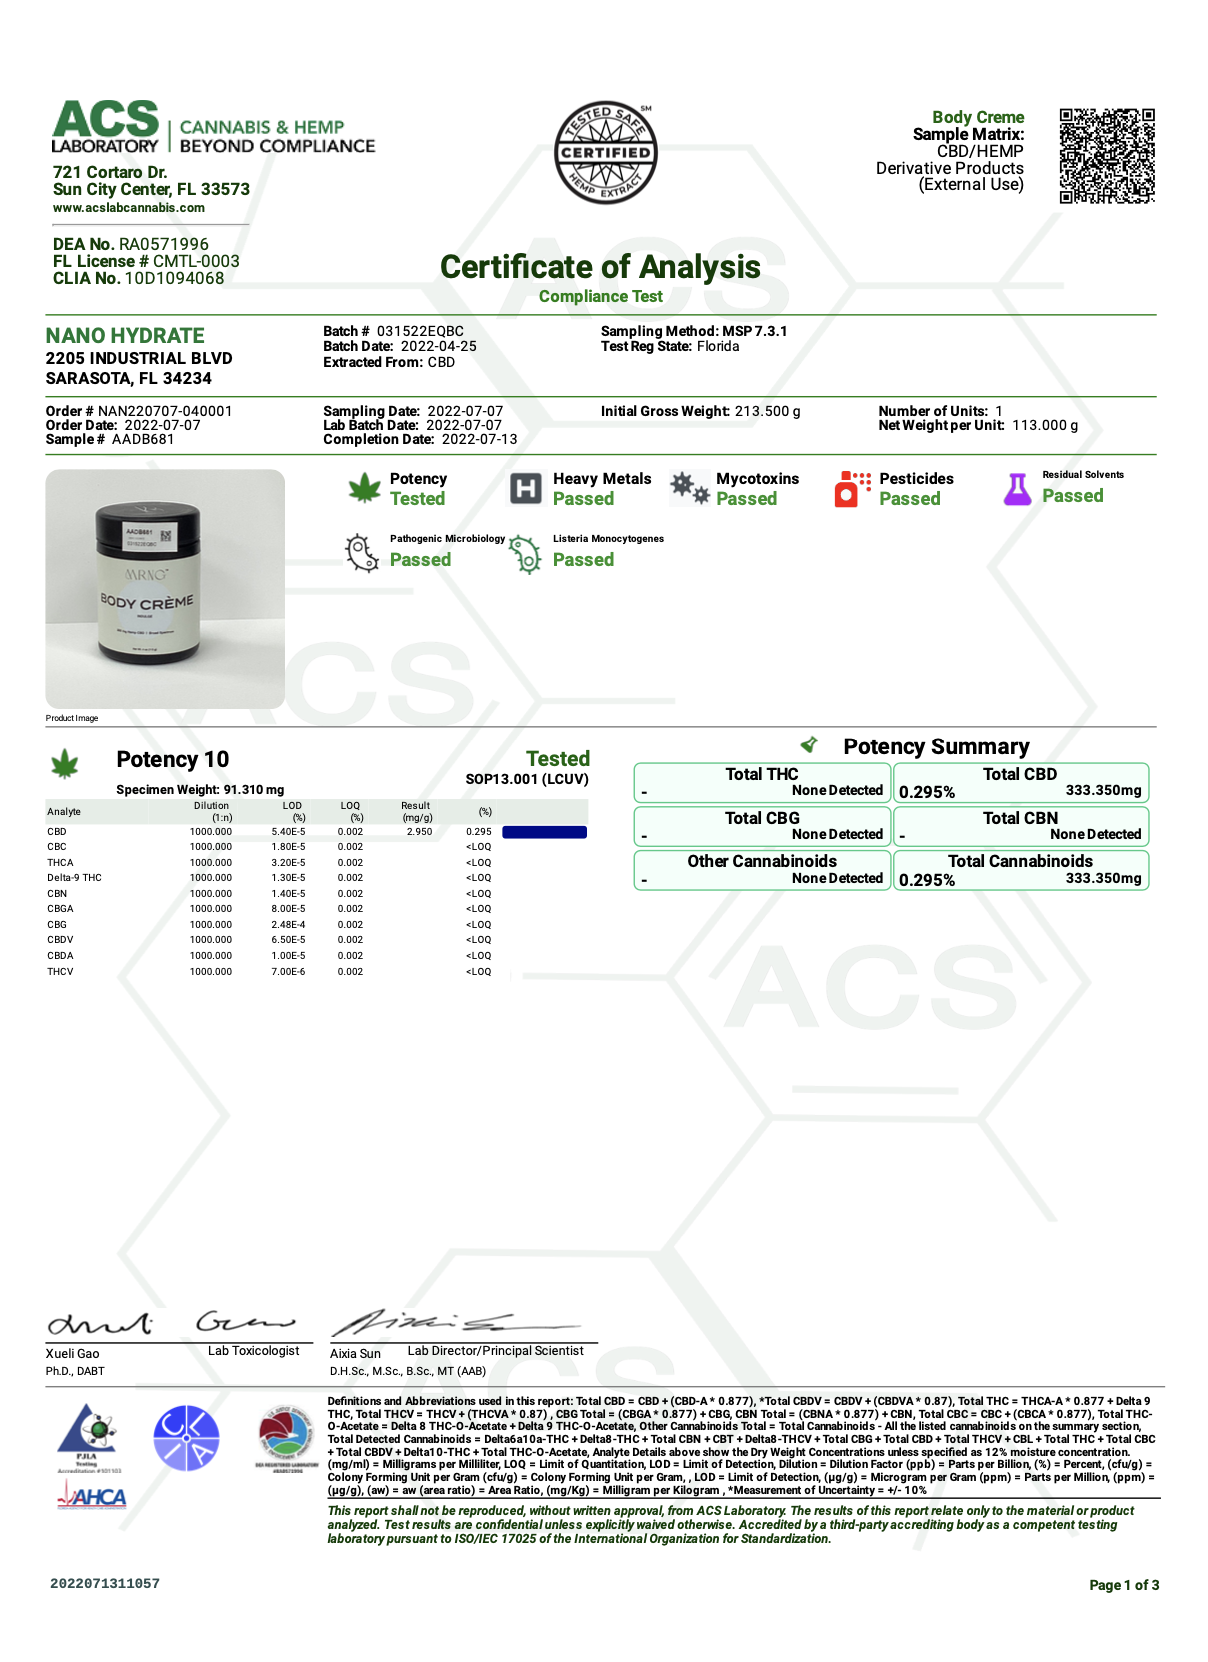 Certificate of Analysis for MRNG LLC Body Creme THC free Hemp CBD Cosmetic Wellness Product